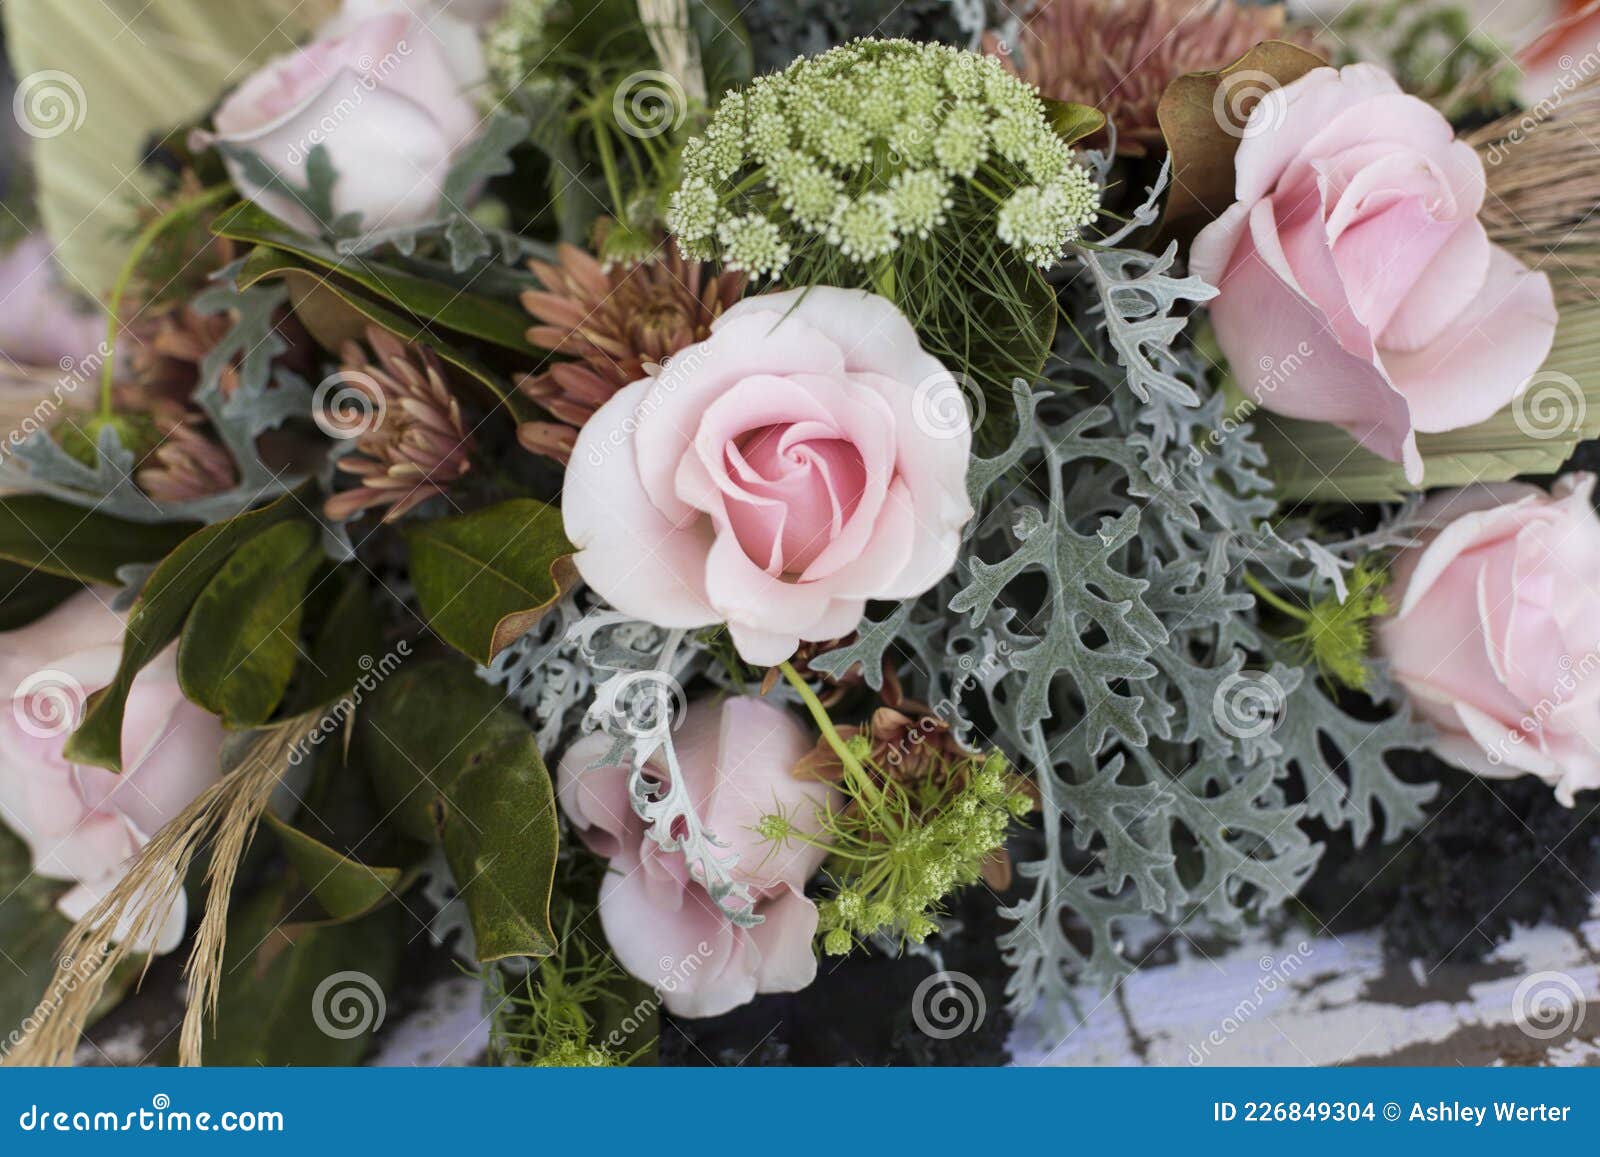 floral details of a wedding bouquet.